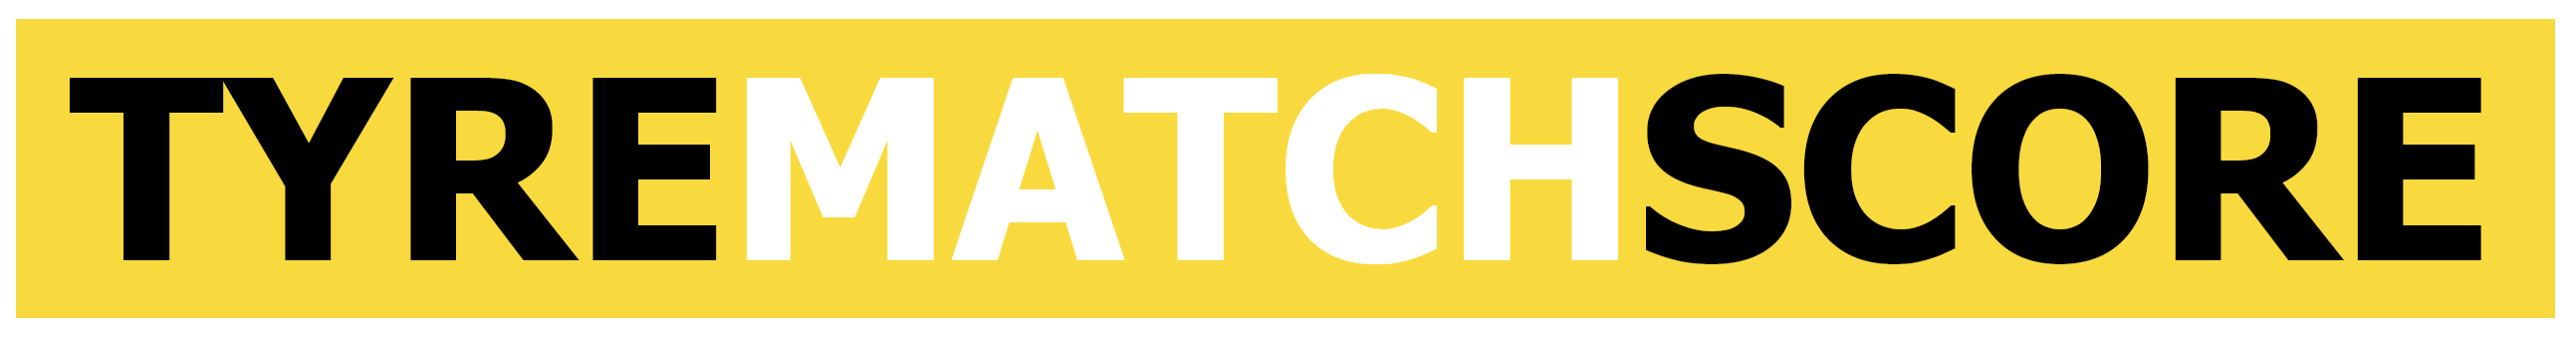 tyrematchscore technology logo